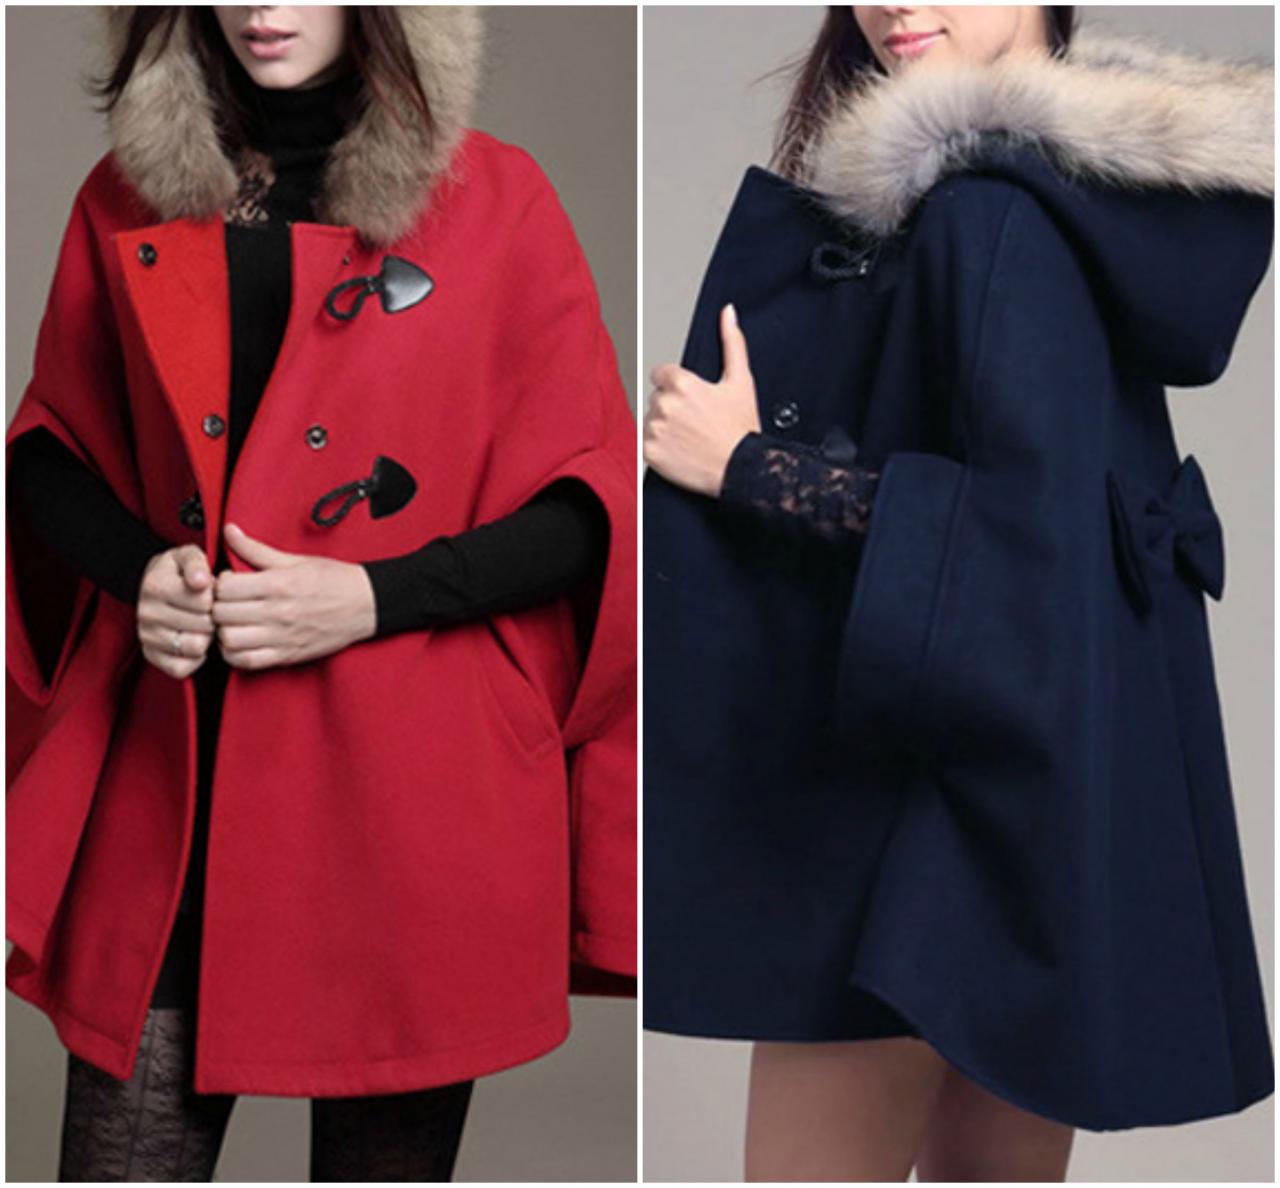 Stylish Faux Fur Hooded Coat With Bow 6xar2kpbsj6zztfxn059c Sb1jyosqwen